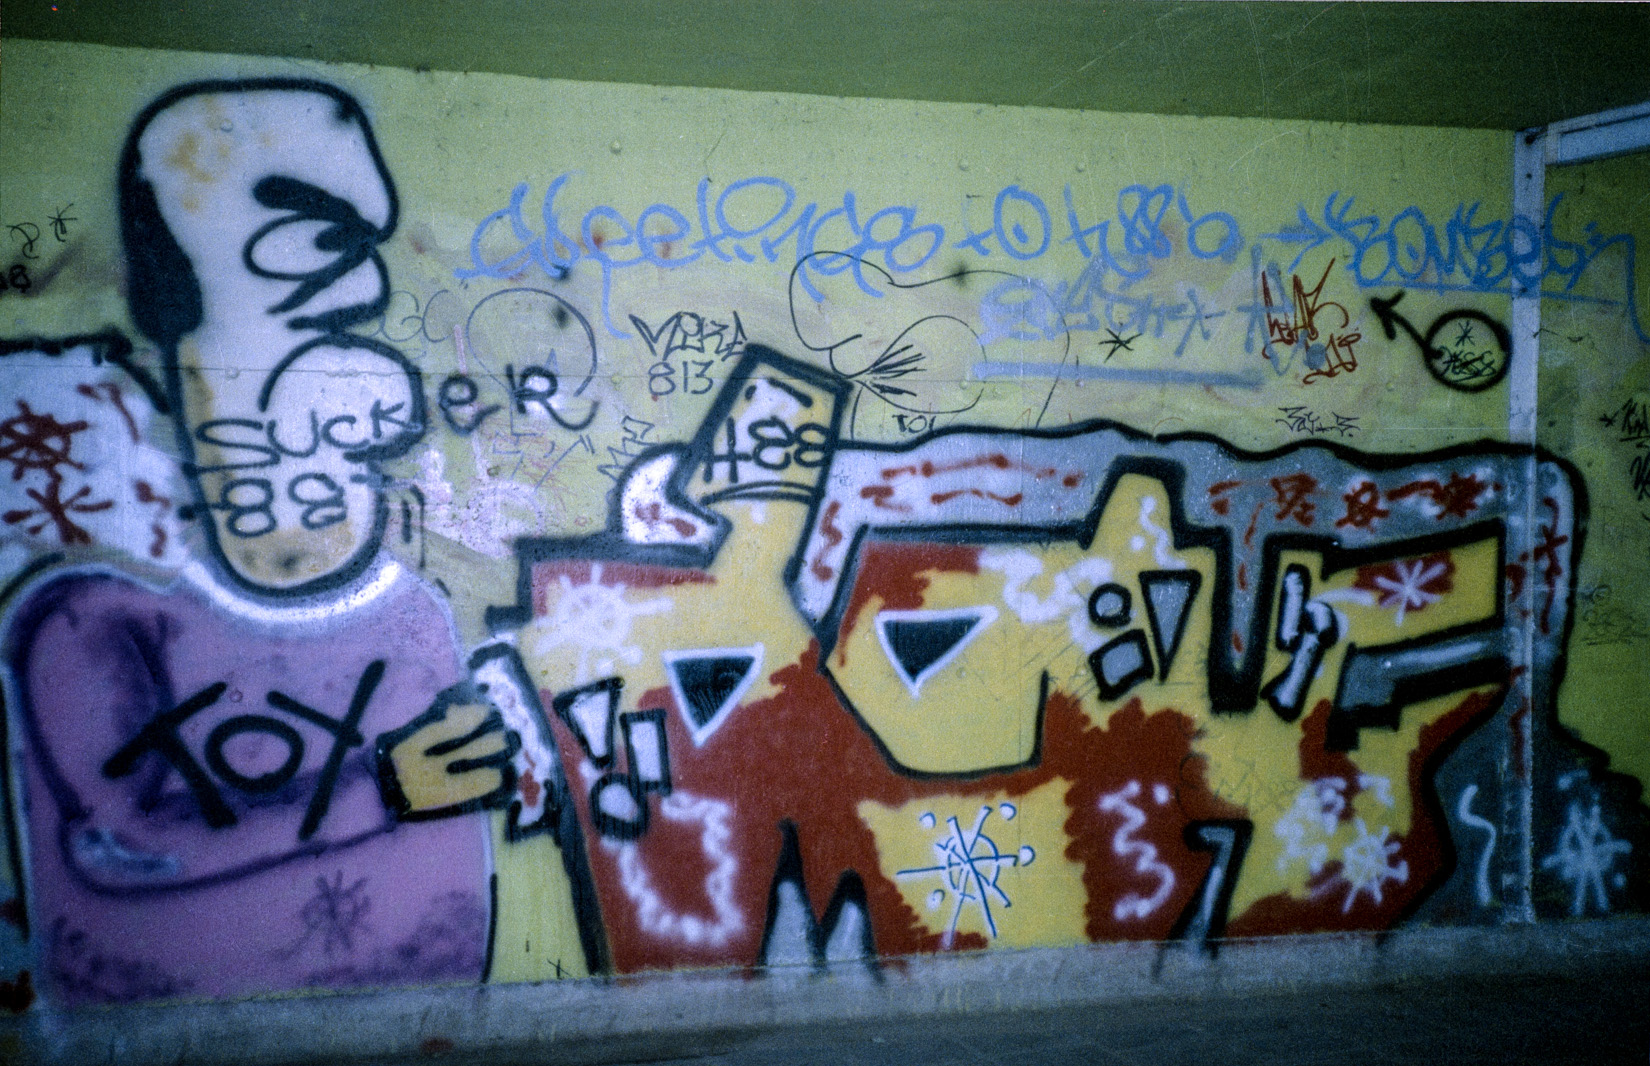 Frankfurt_Graffiti_1988_1989_H88_FRC (17 von 25)